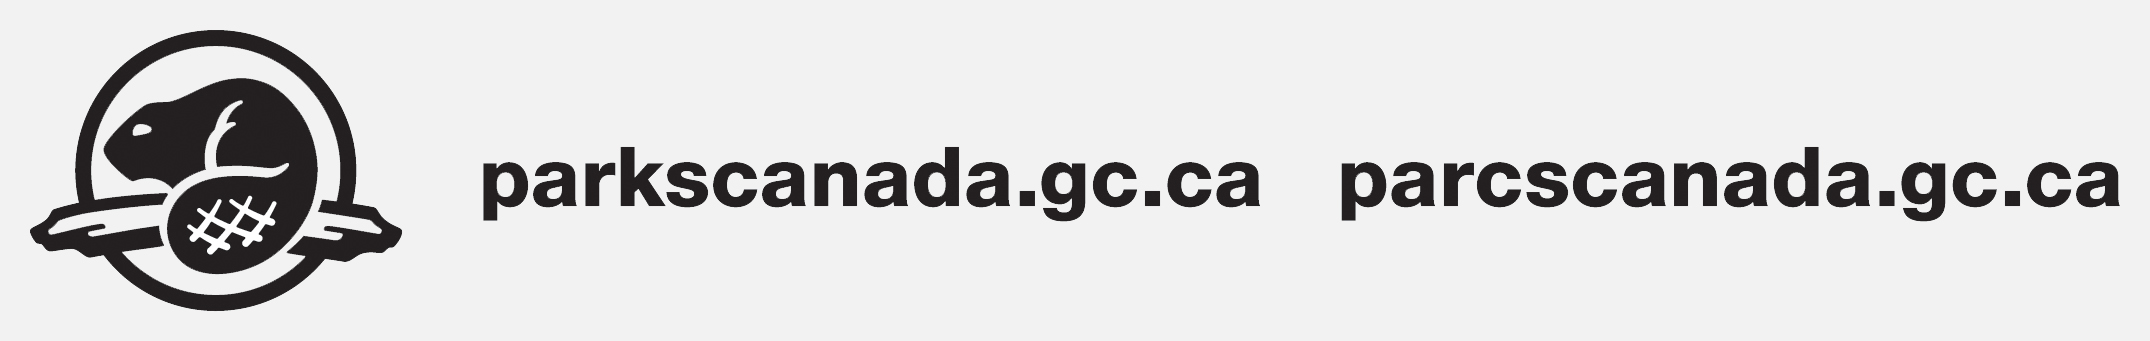 Parks Canada Agency website